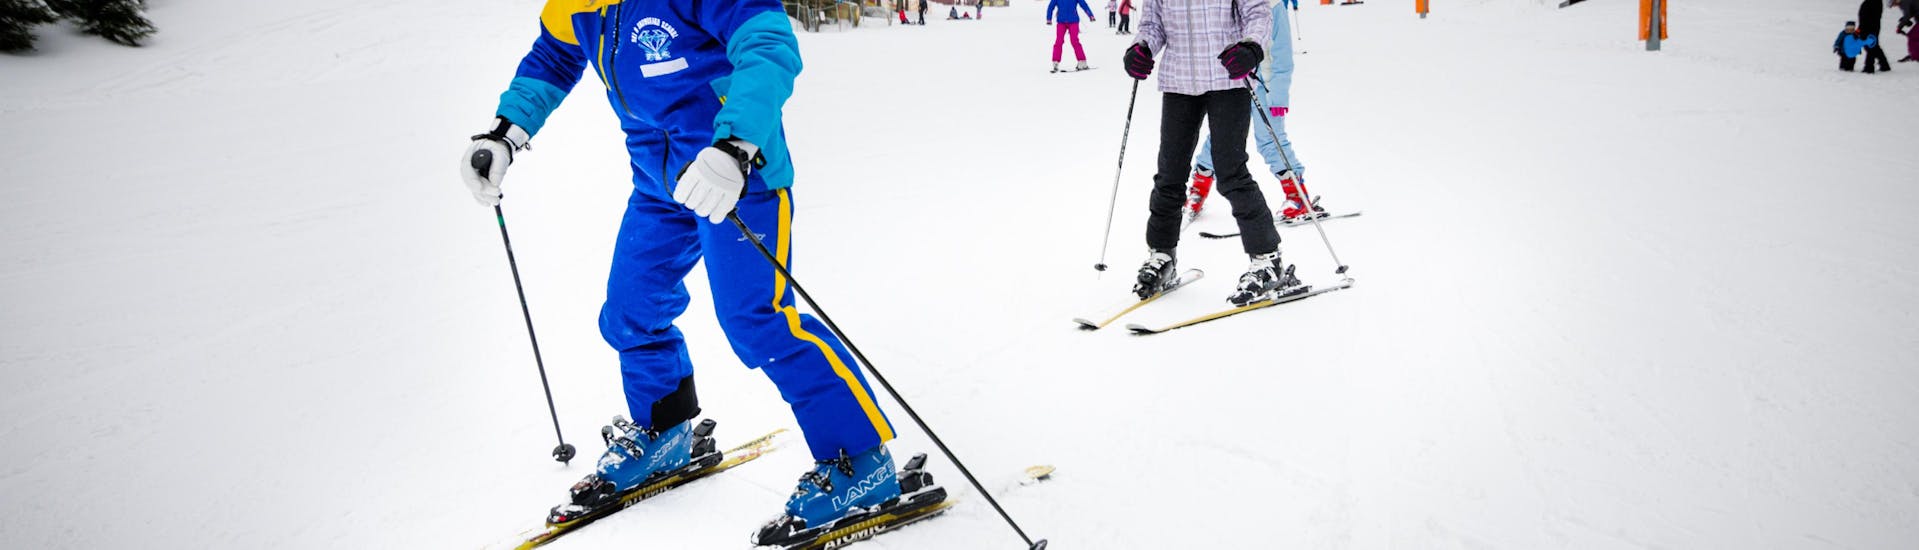 Private Ski Lessons + Ski Hire Package for Adults of All Levels from Crystal Ski  Demänovská Dolina.